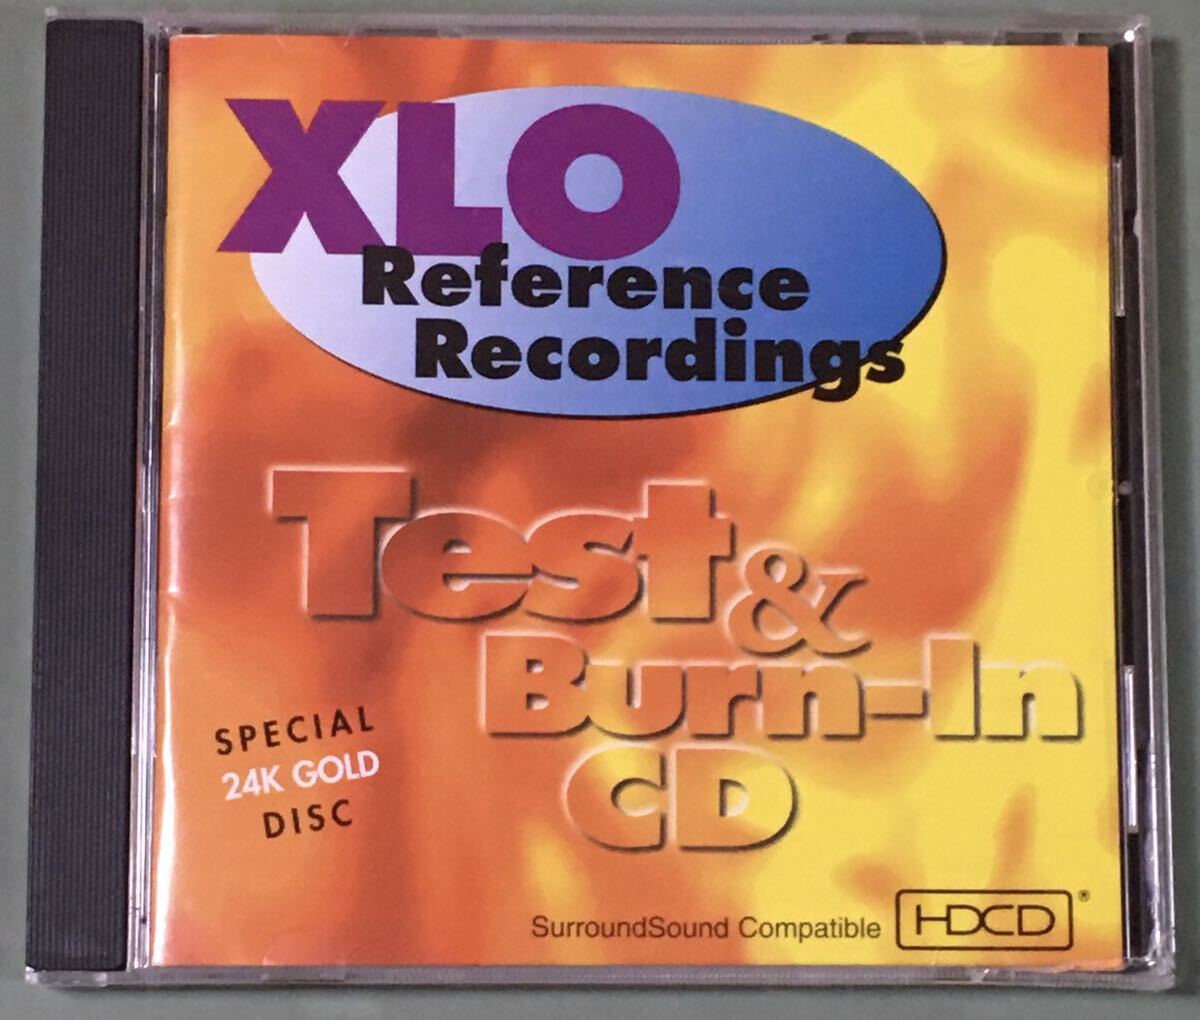 24K GOLD CD/XLO/REFERENCE RECORDINGS/TEST&BURN-IN CD/audiophile_画像1